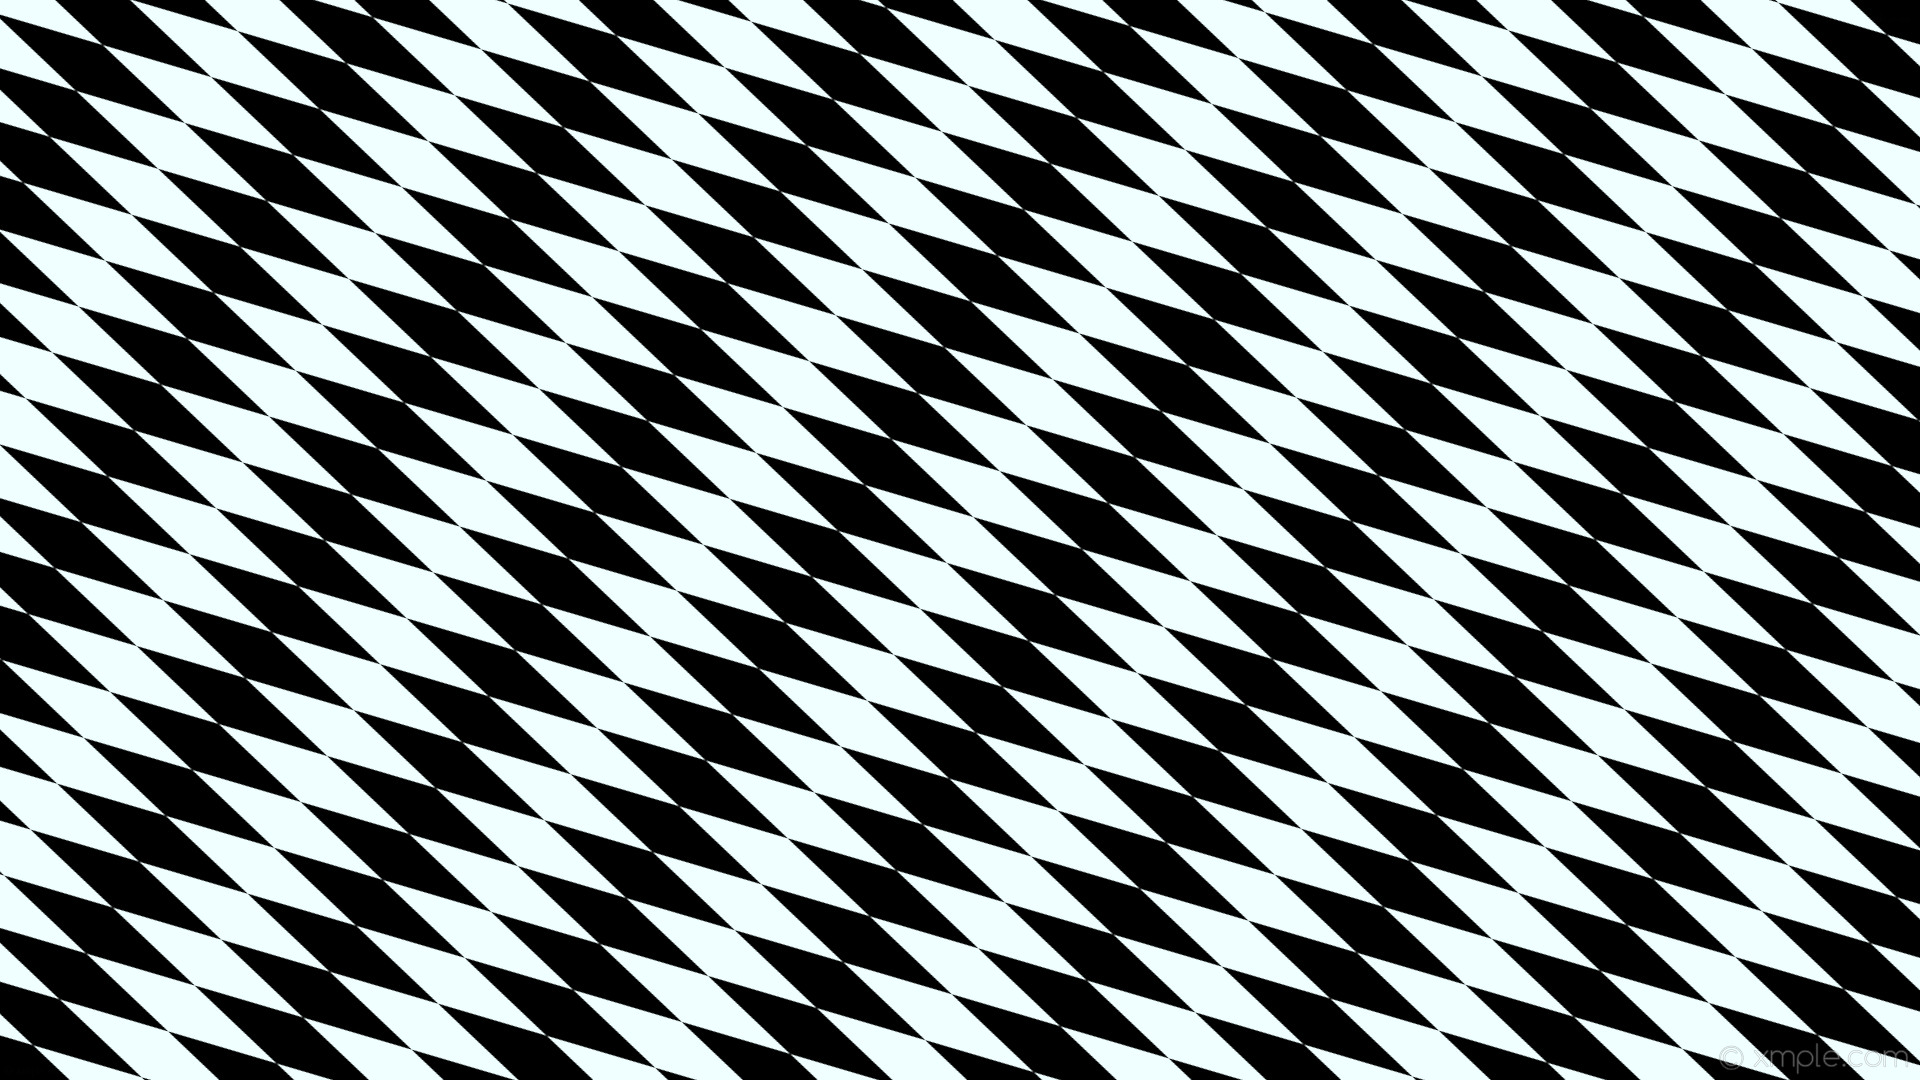 1920x1080 wallpaper rhombus black white diamond lozenge azure #f0ffff #000000 150Â°  220px 53px